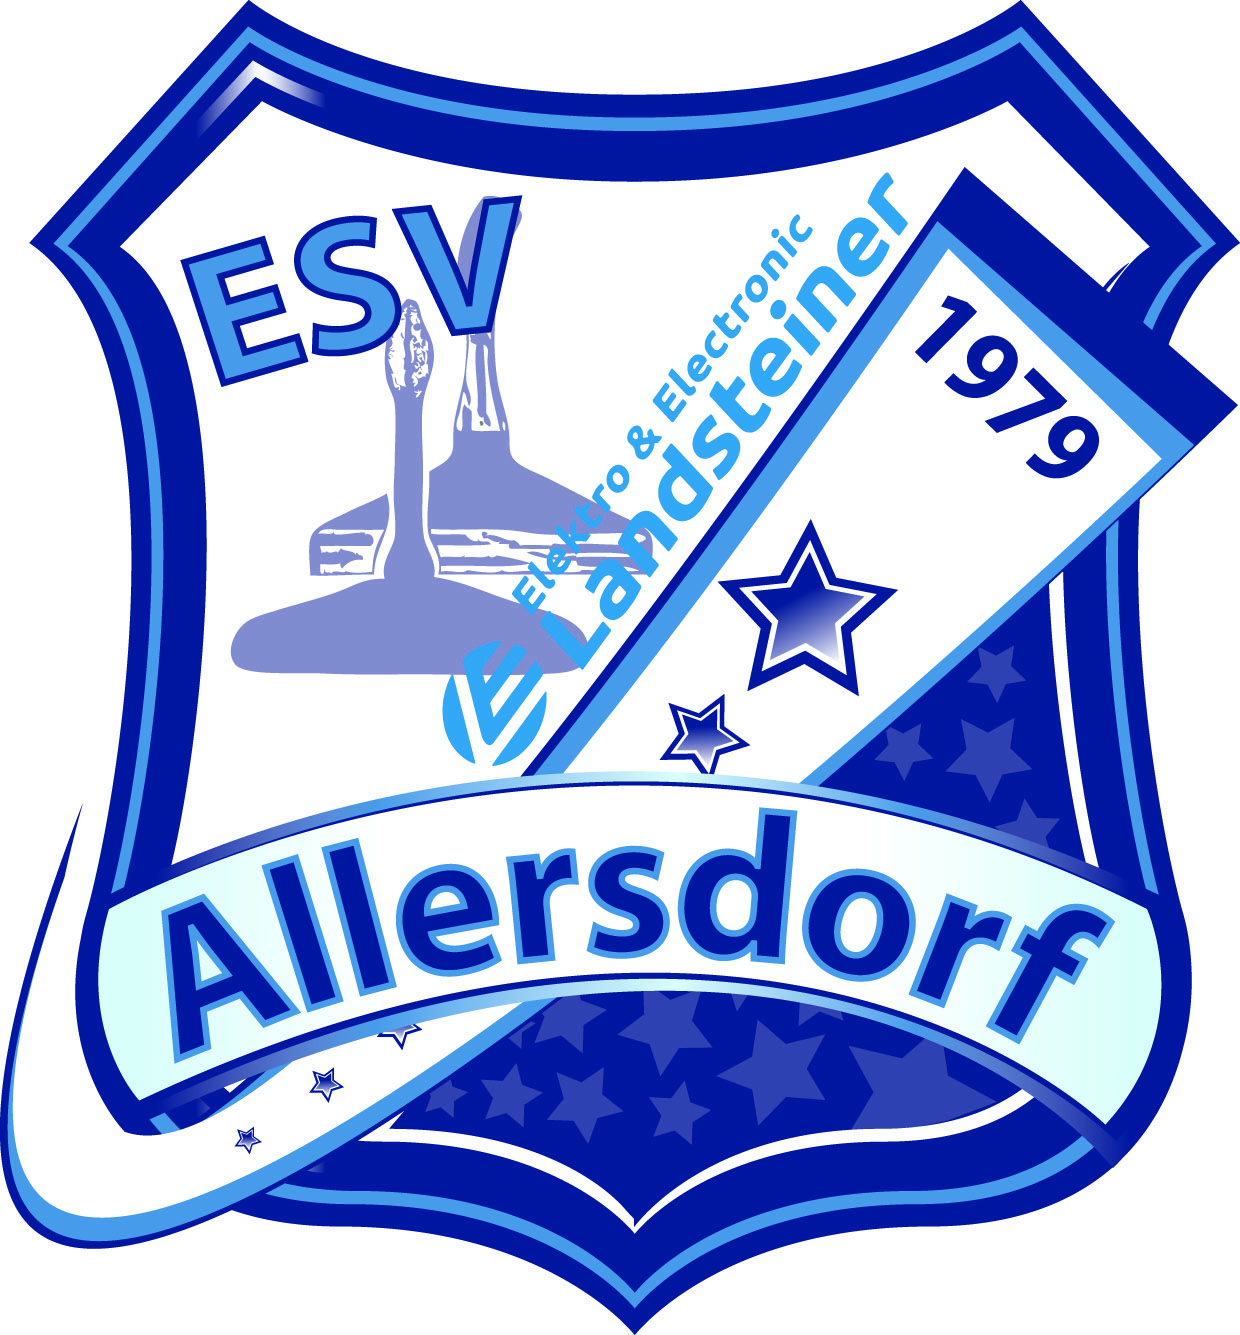 ESV Landsteiner Allersdorf